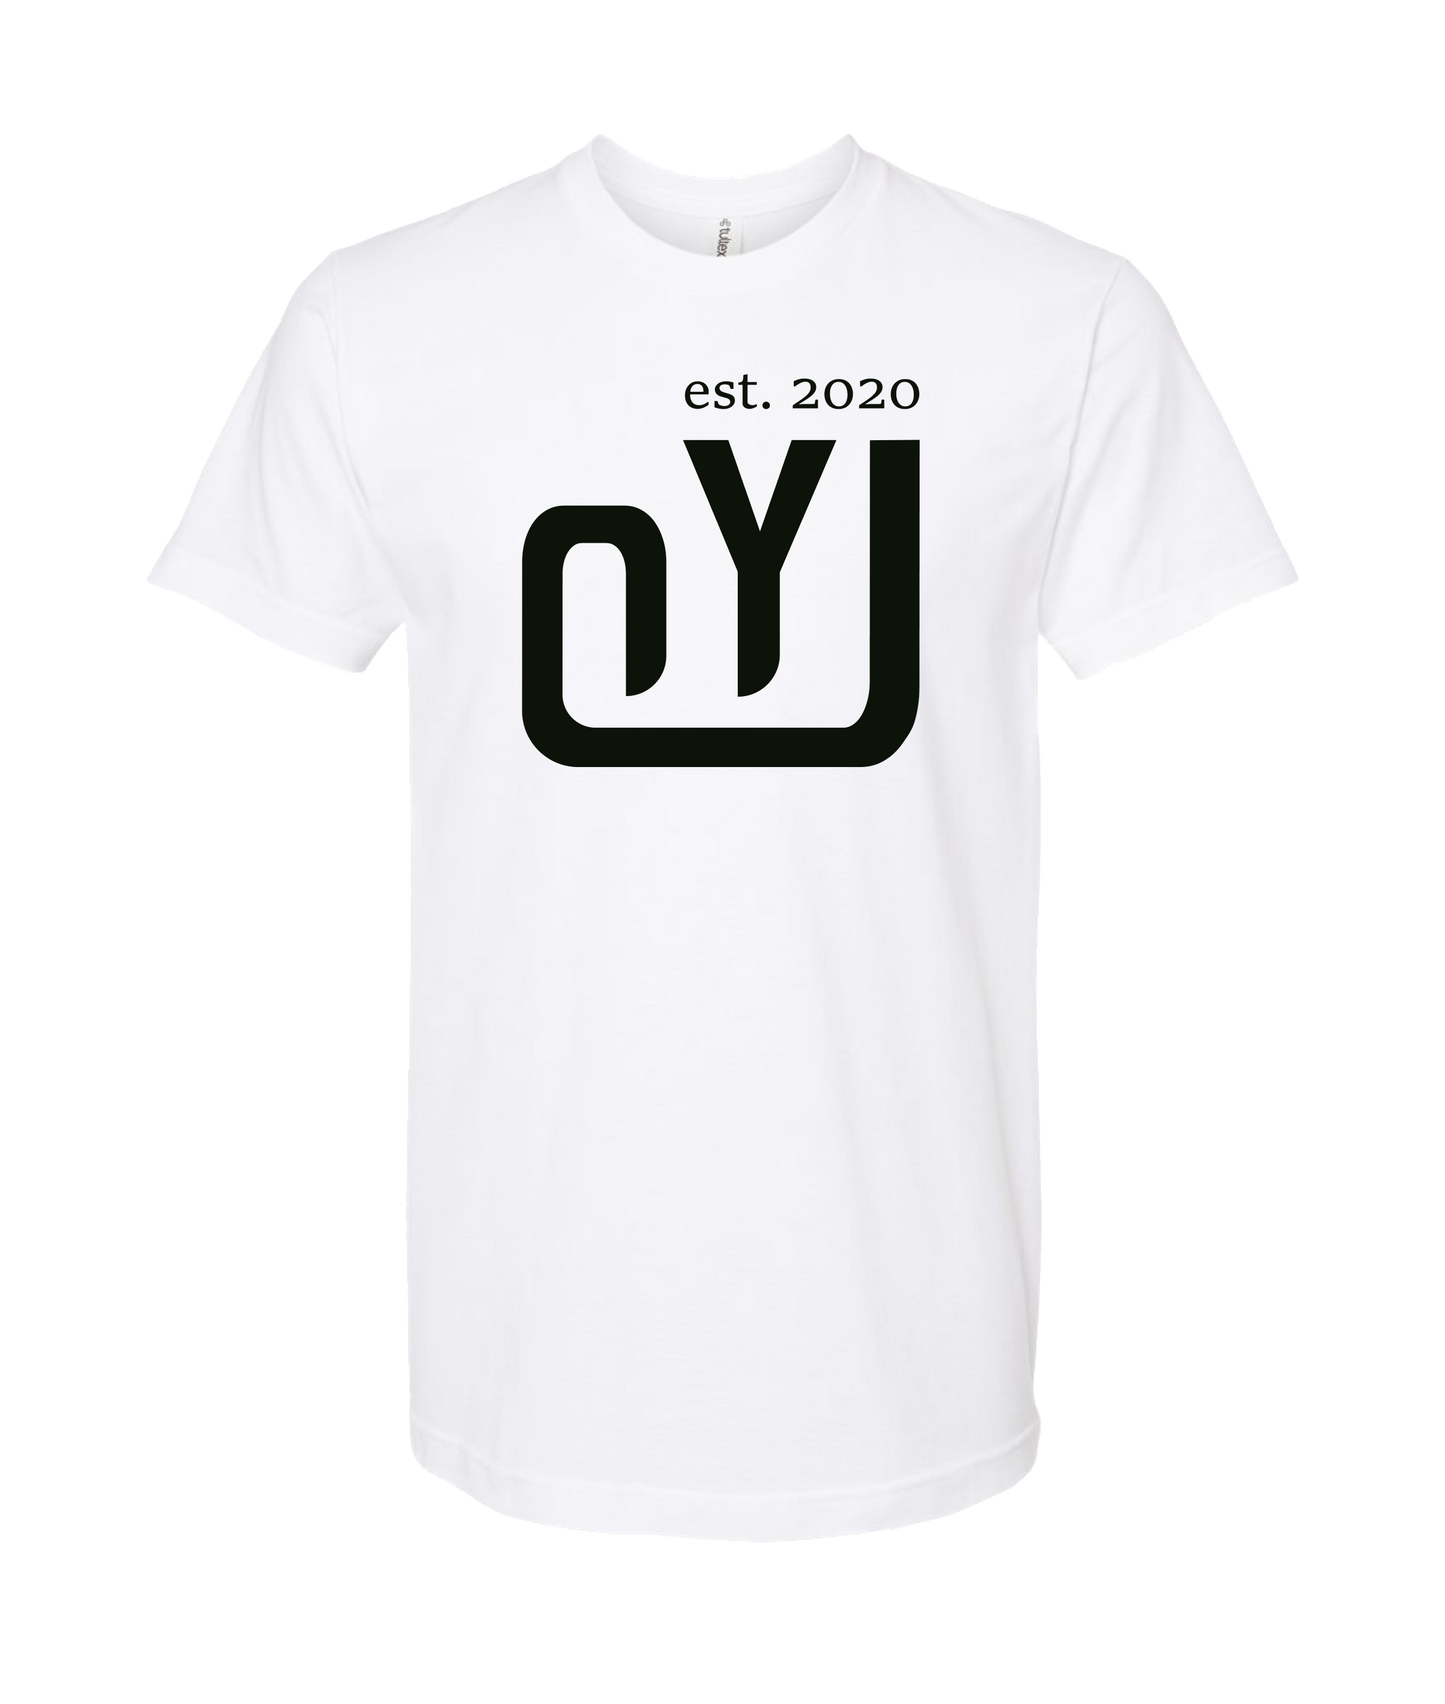 OY Jerky - Submark Color - White T Shirt